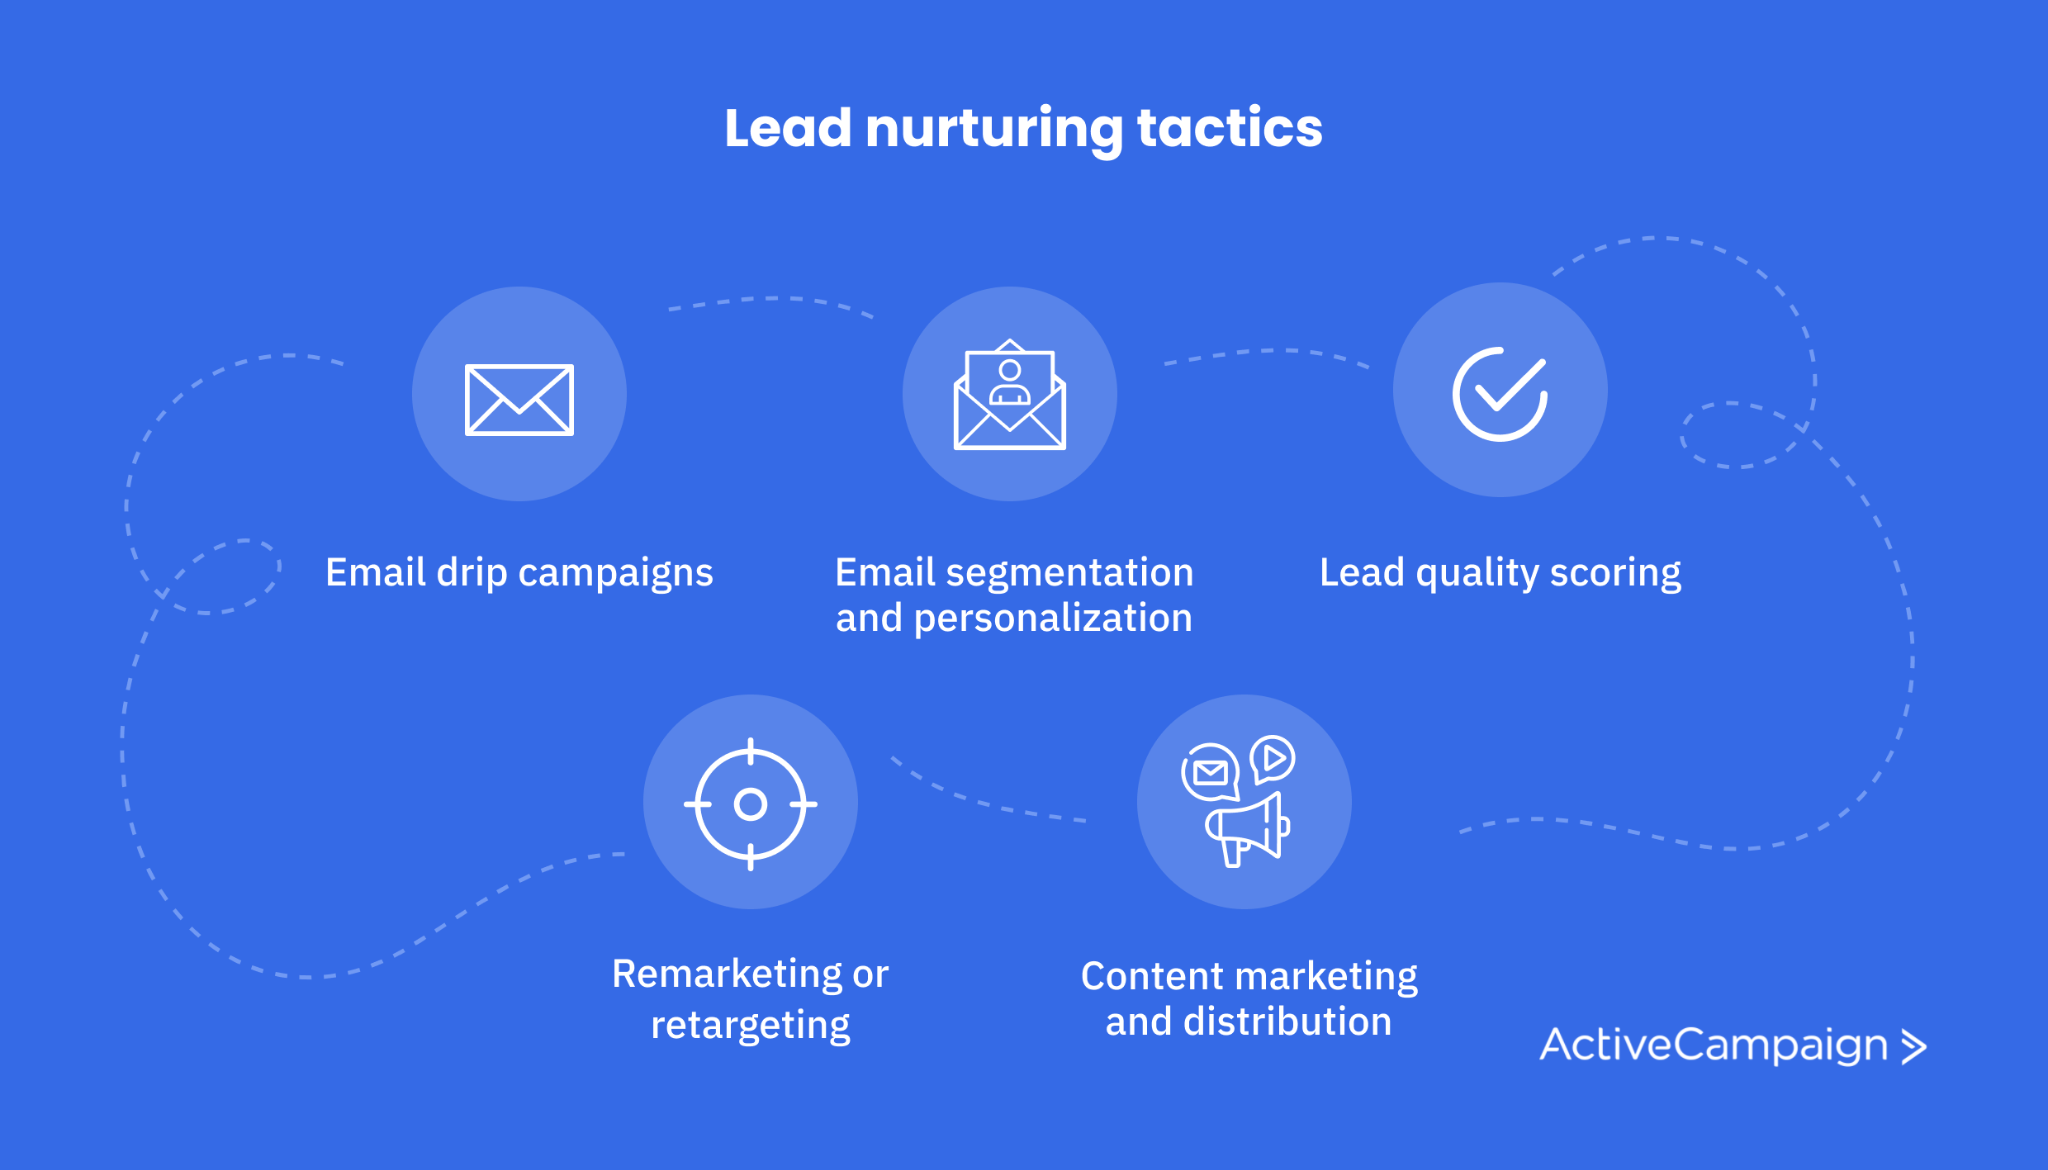 List of lead nurturing tactics including drip campaigns, remarketing, sales calls, etc